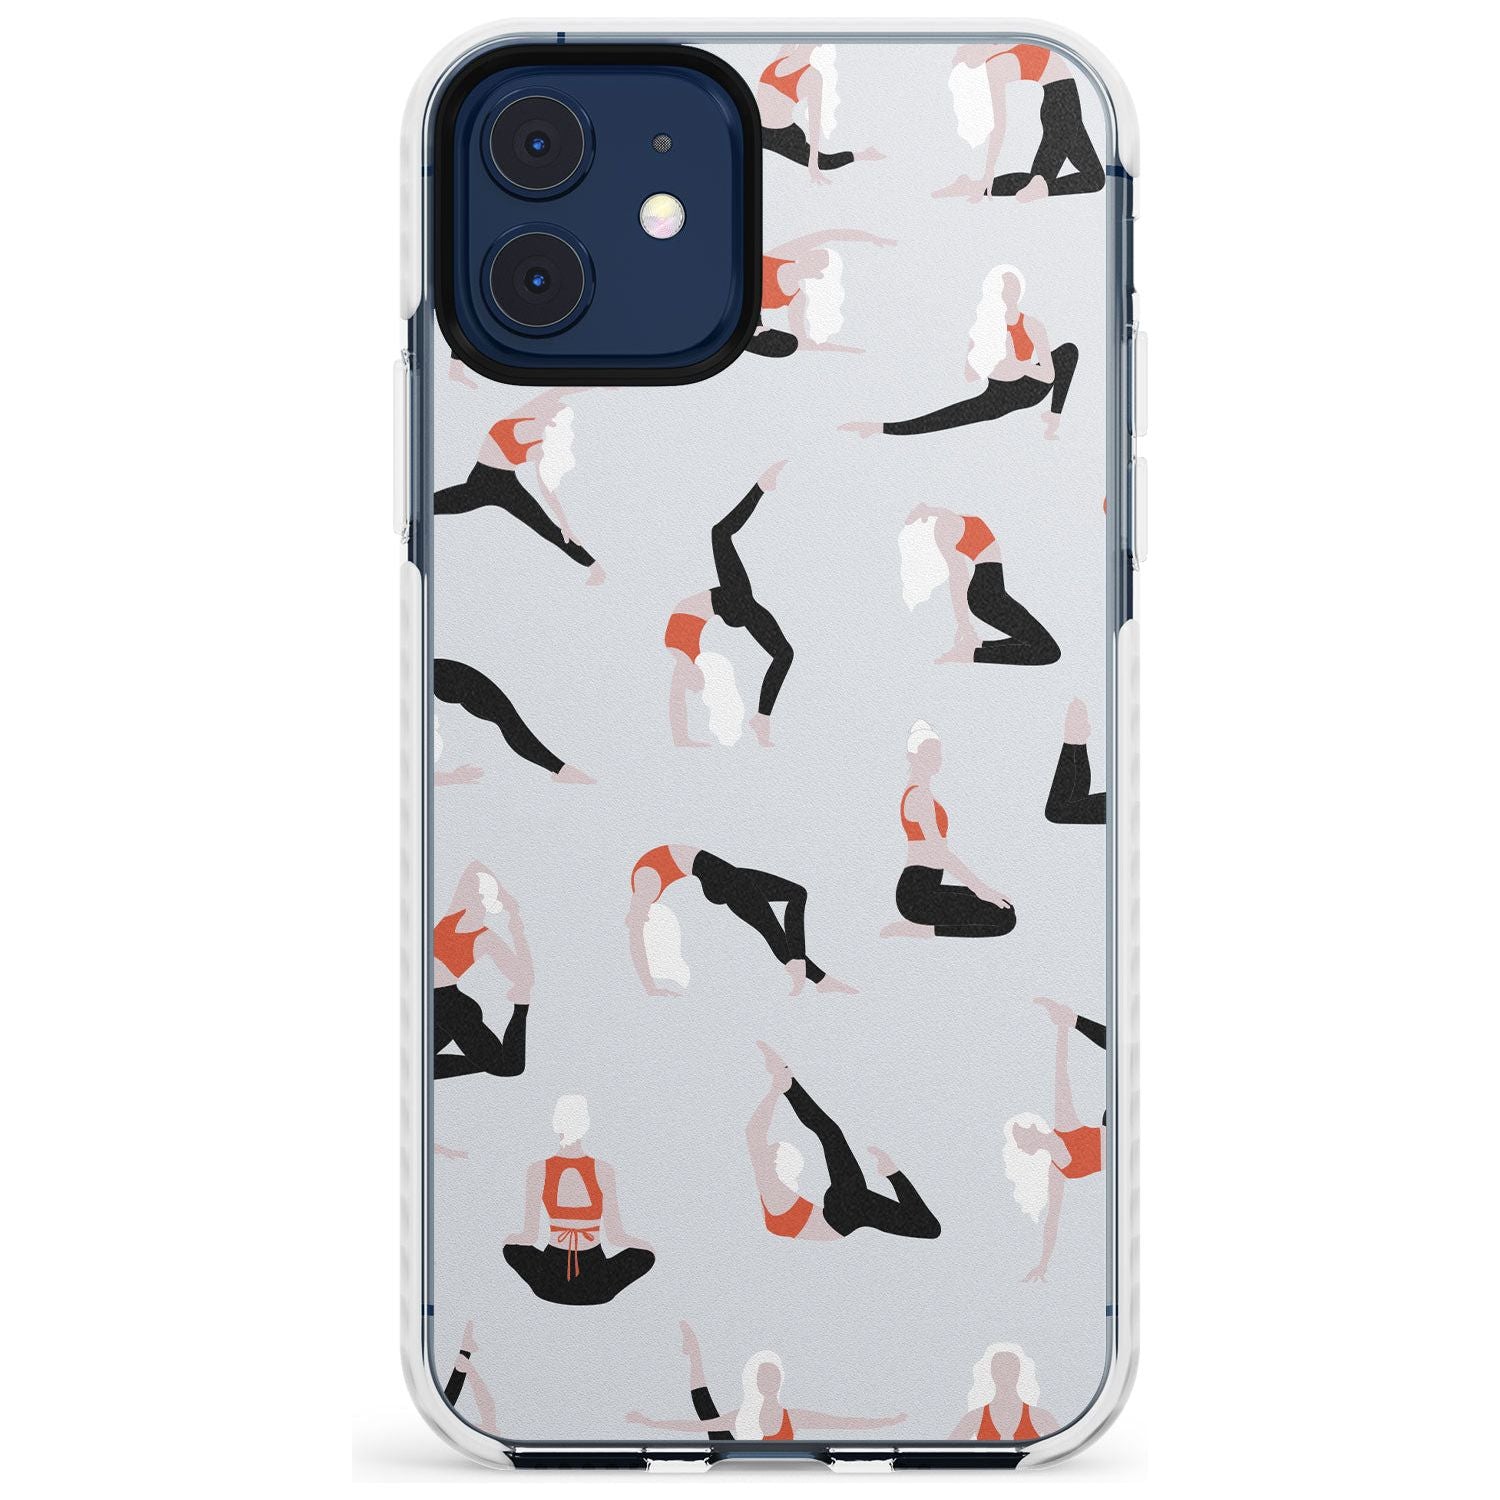 Yoga Poses Slim TPU Phone Case for iPhone 11